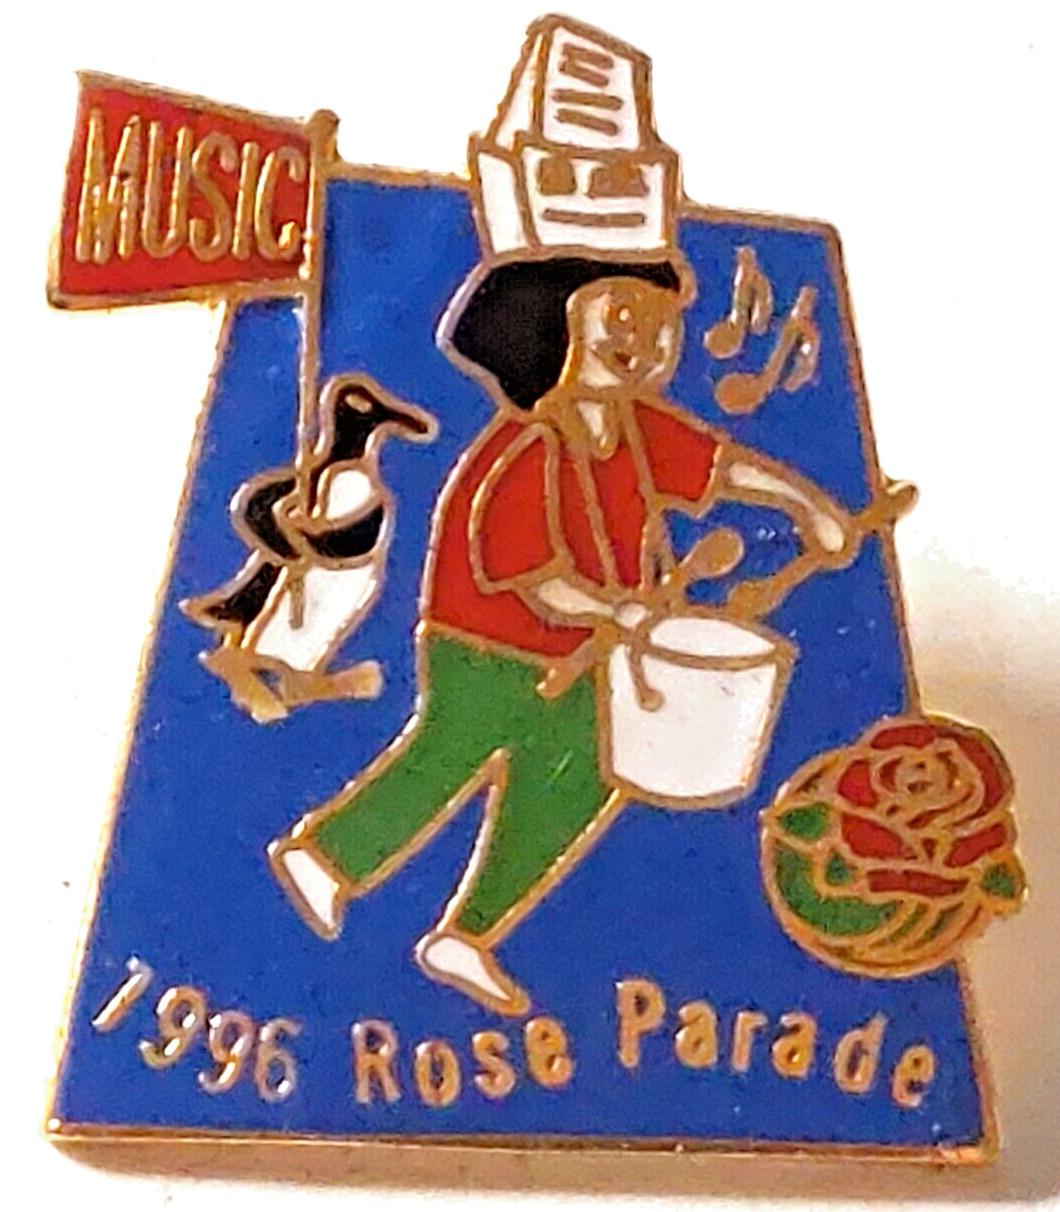 Rose Parade 1996 MUSIC Lapel Pin (082023)